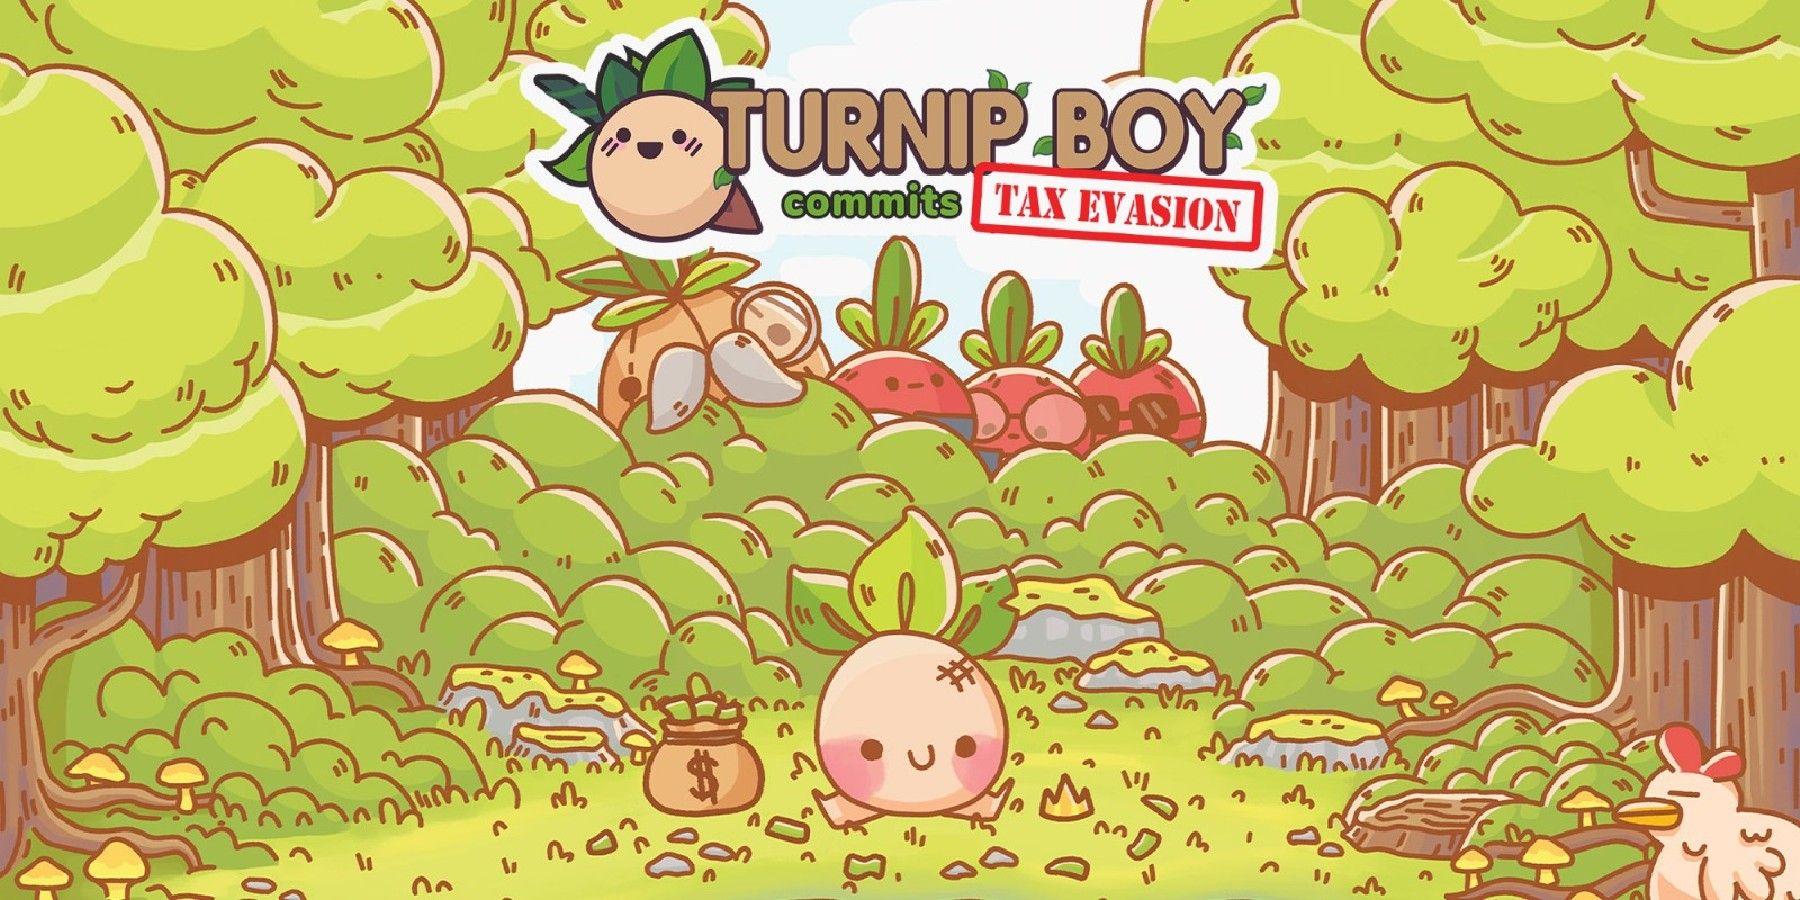 turnip-boy-commits-tax-evasion